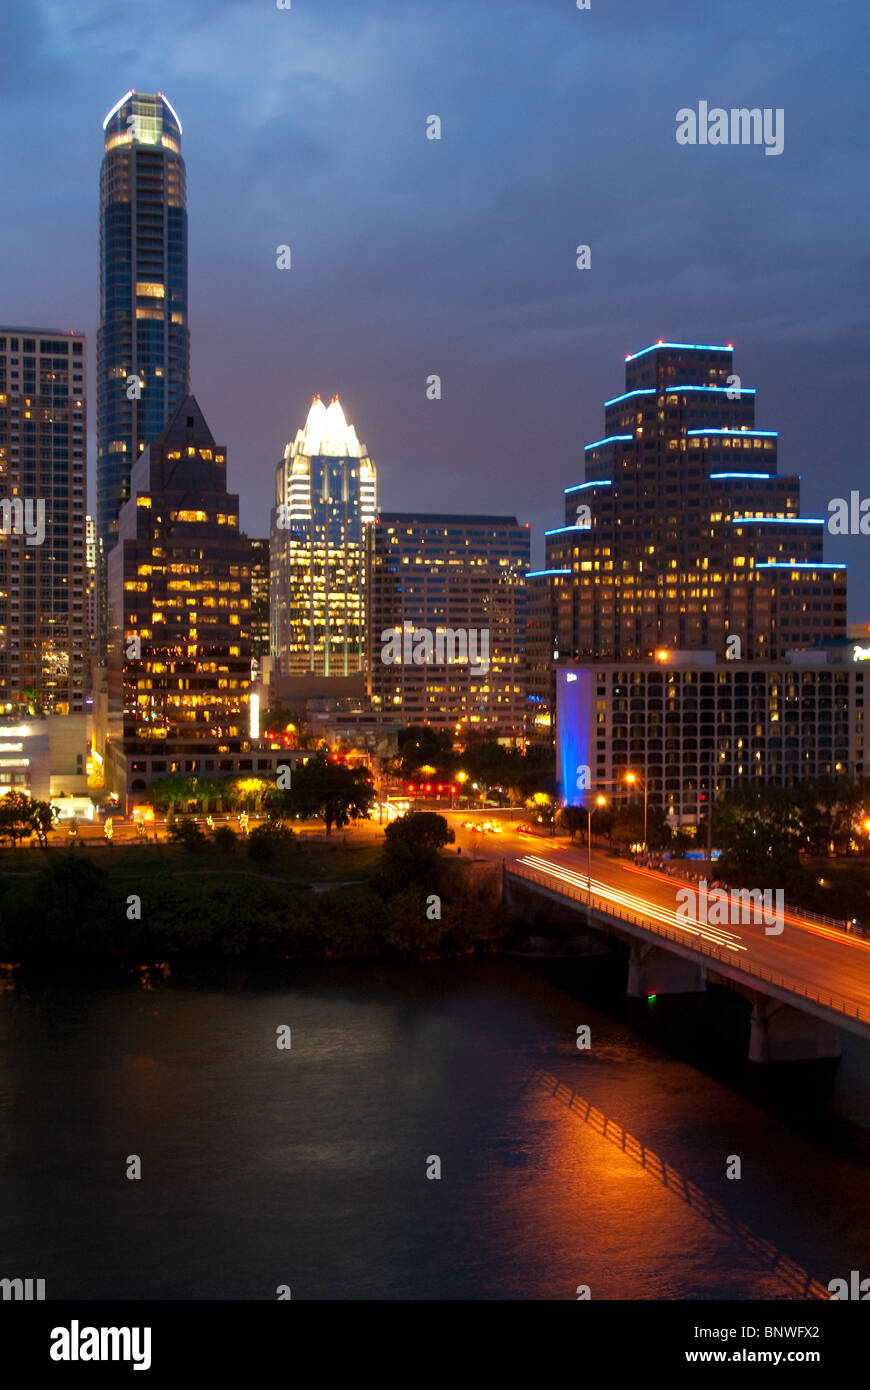 City skyline at night of Austin, Texas, USA Stock Photo